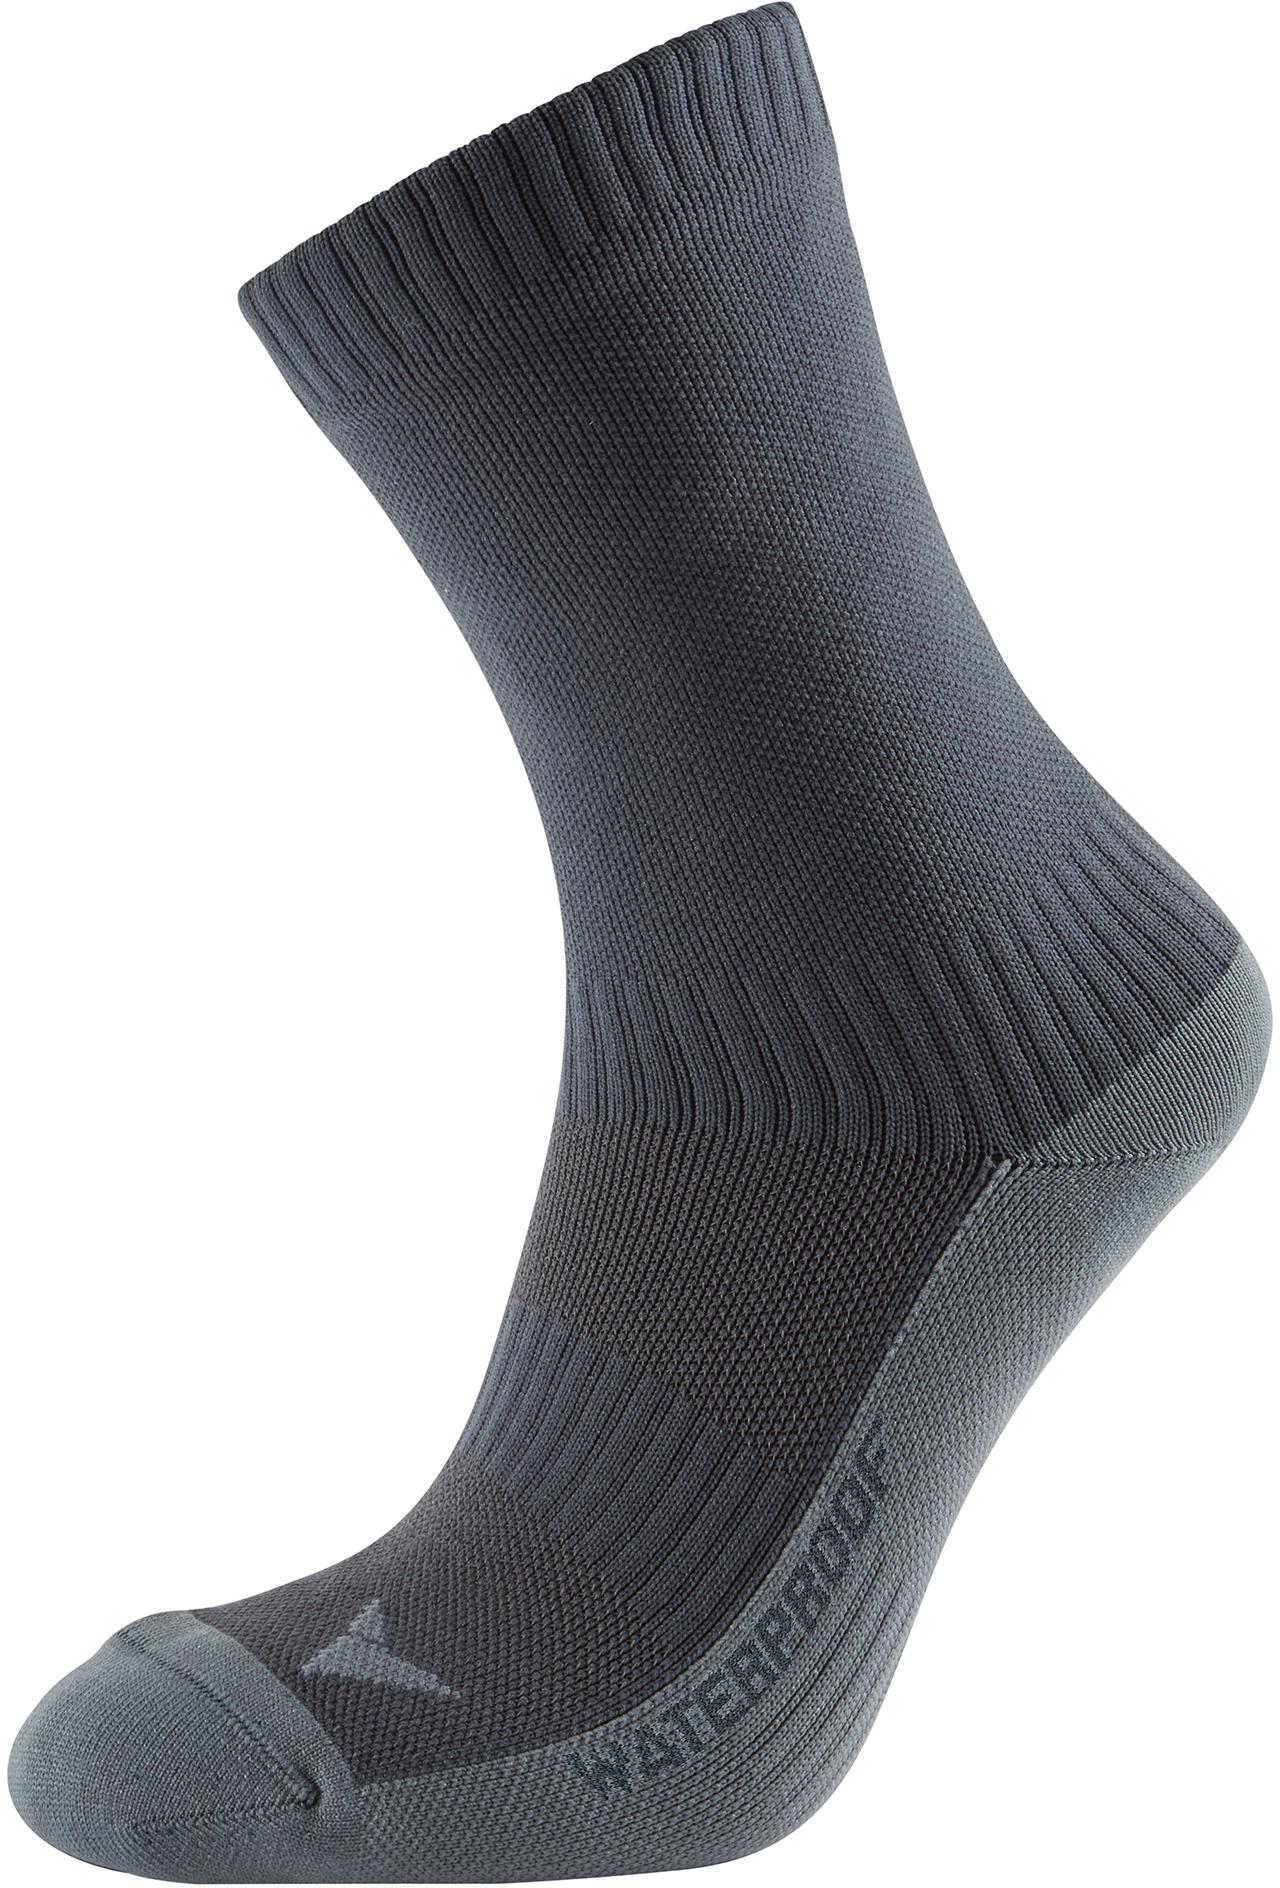 Altura Waterproof Socks Black S/M